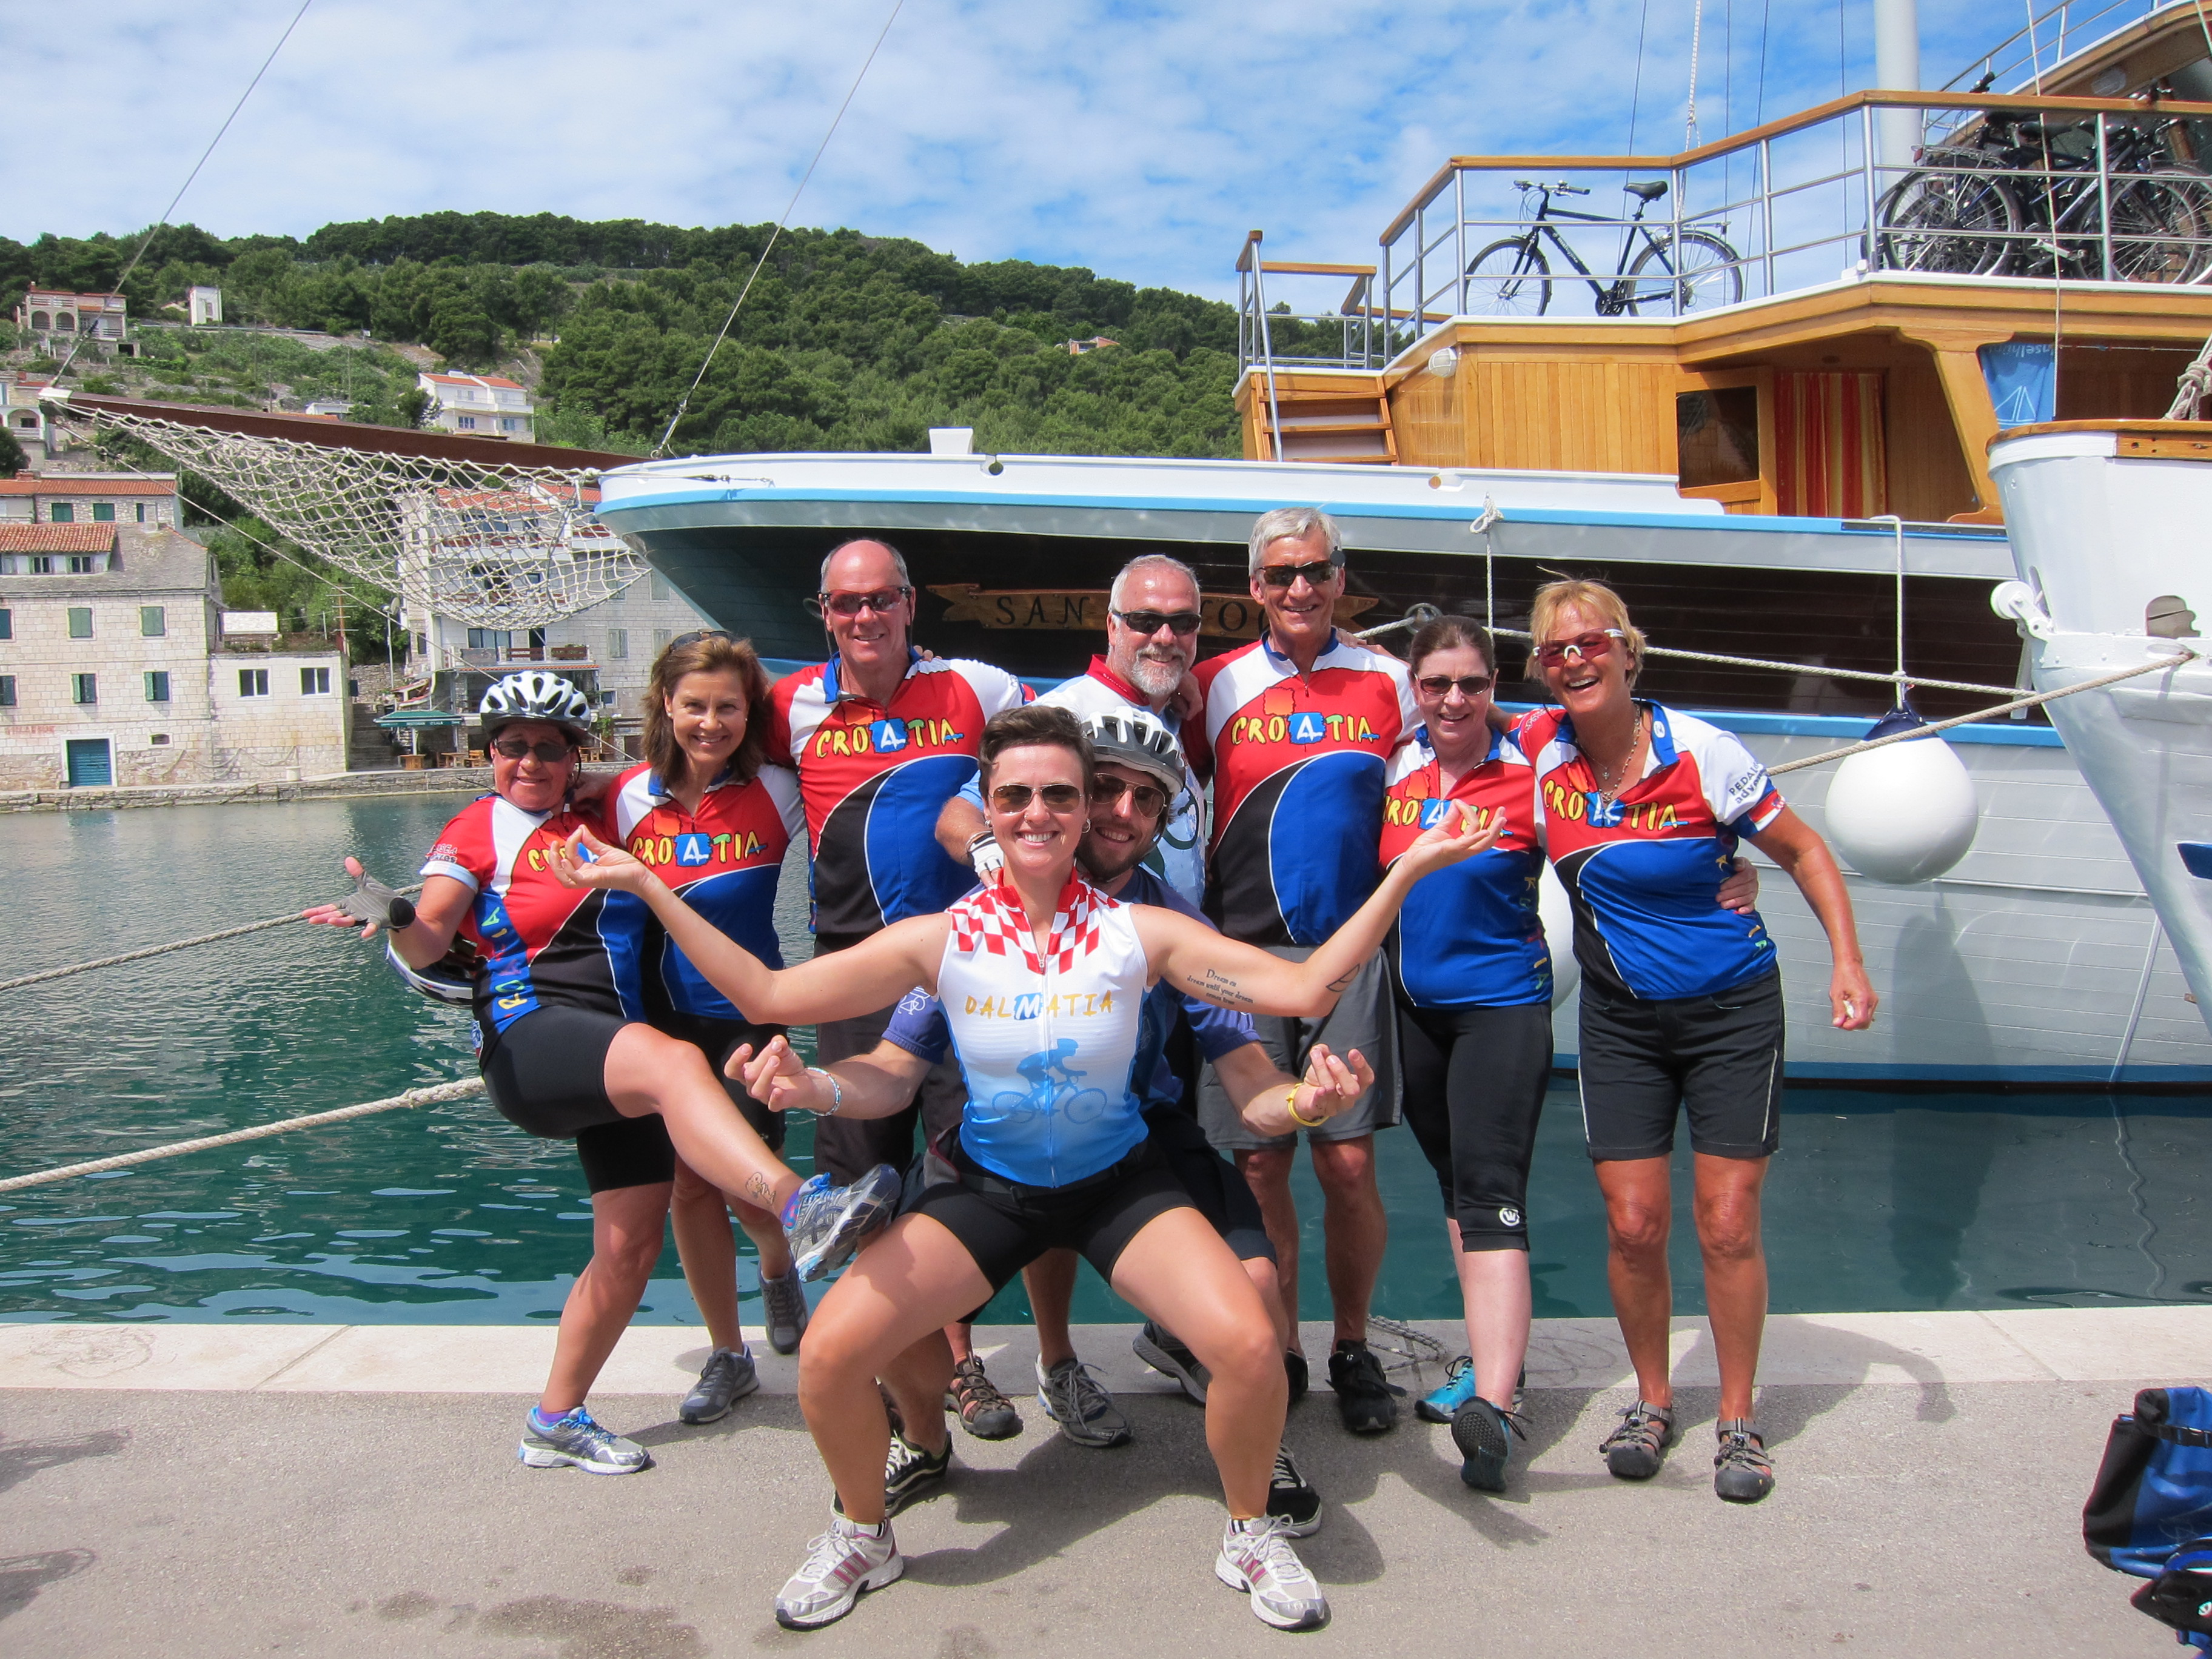 Croatia dalmatia islands bike tour group cyclists